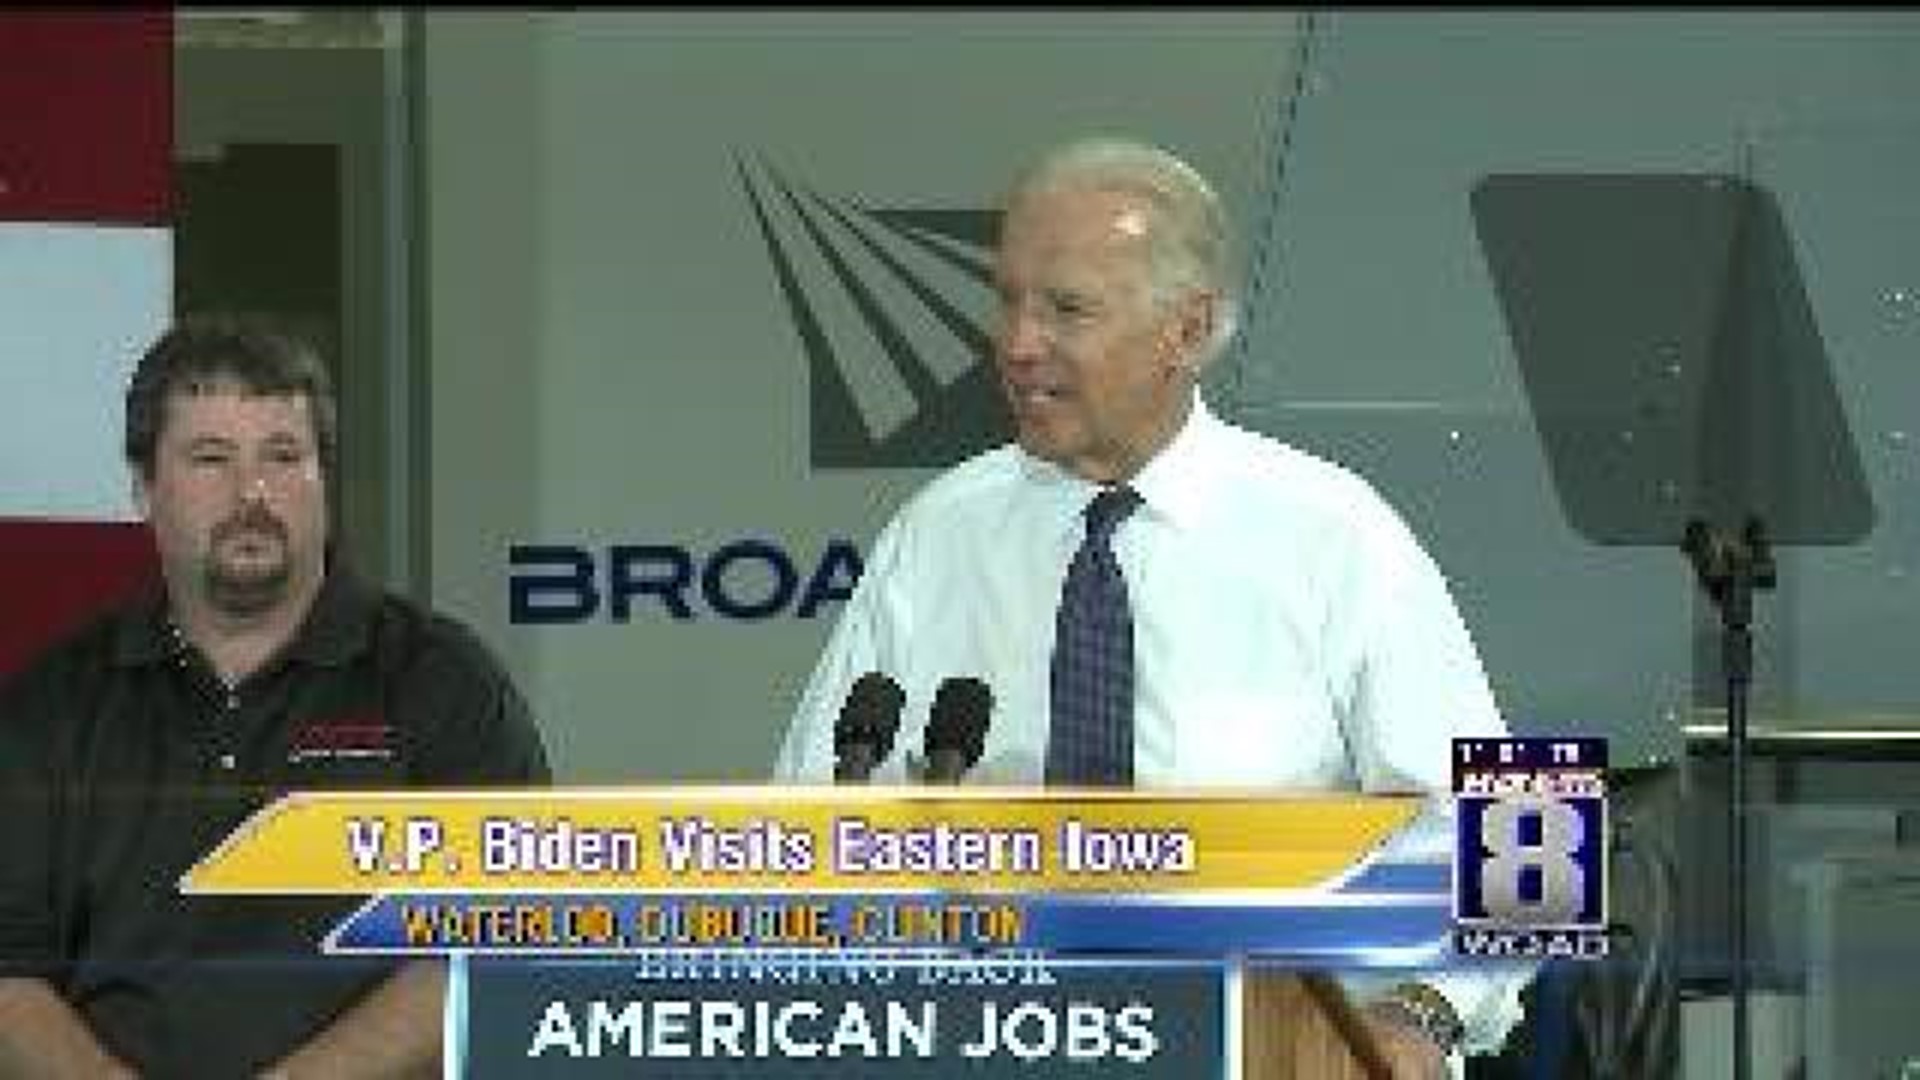 Vice President Biden Visits Eastern Iowa